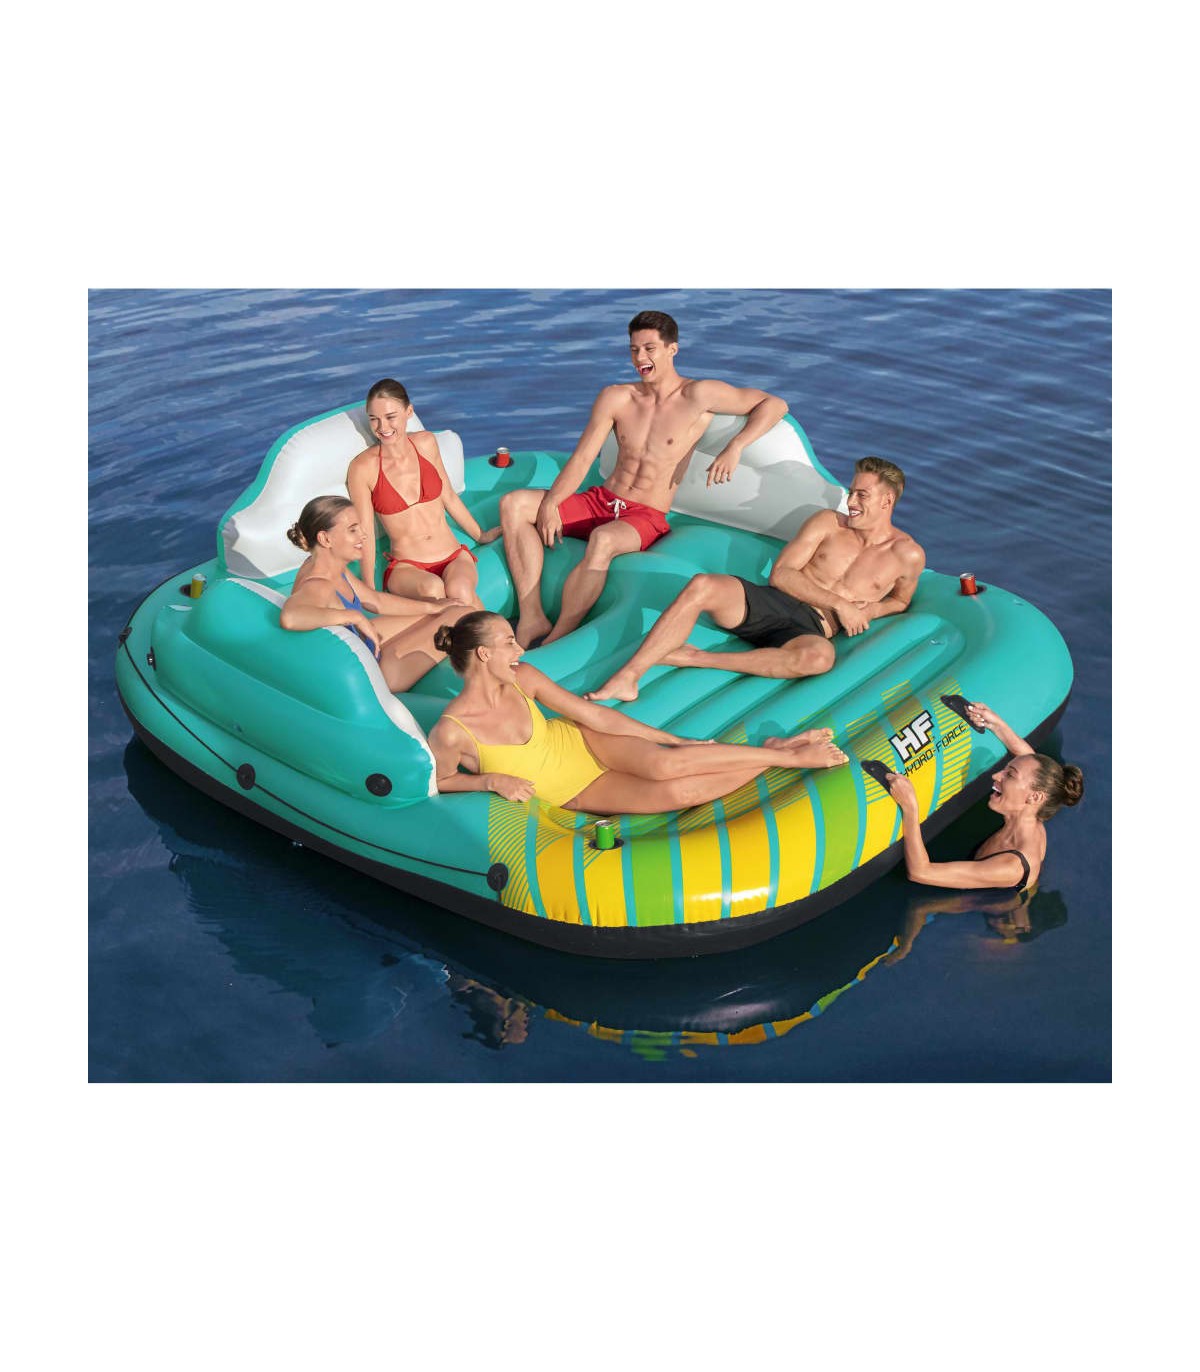 OFERTA - Colchoneta inflable para 5 personas Sunny Lounge , ideal